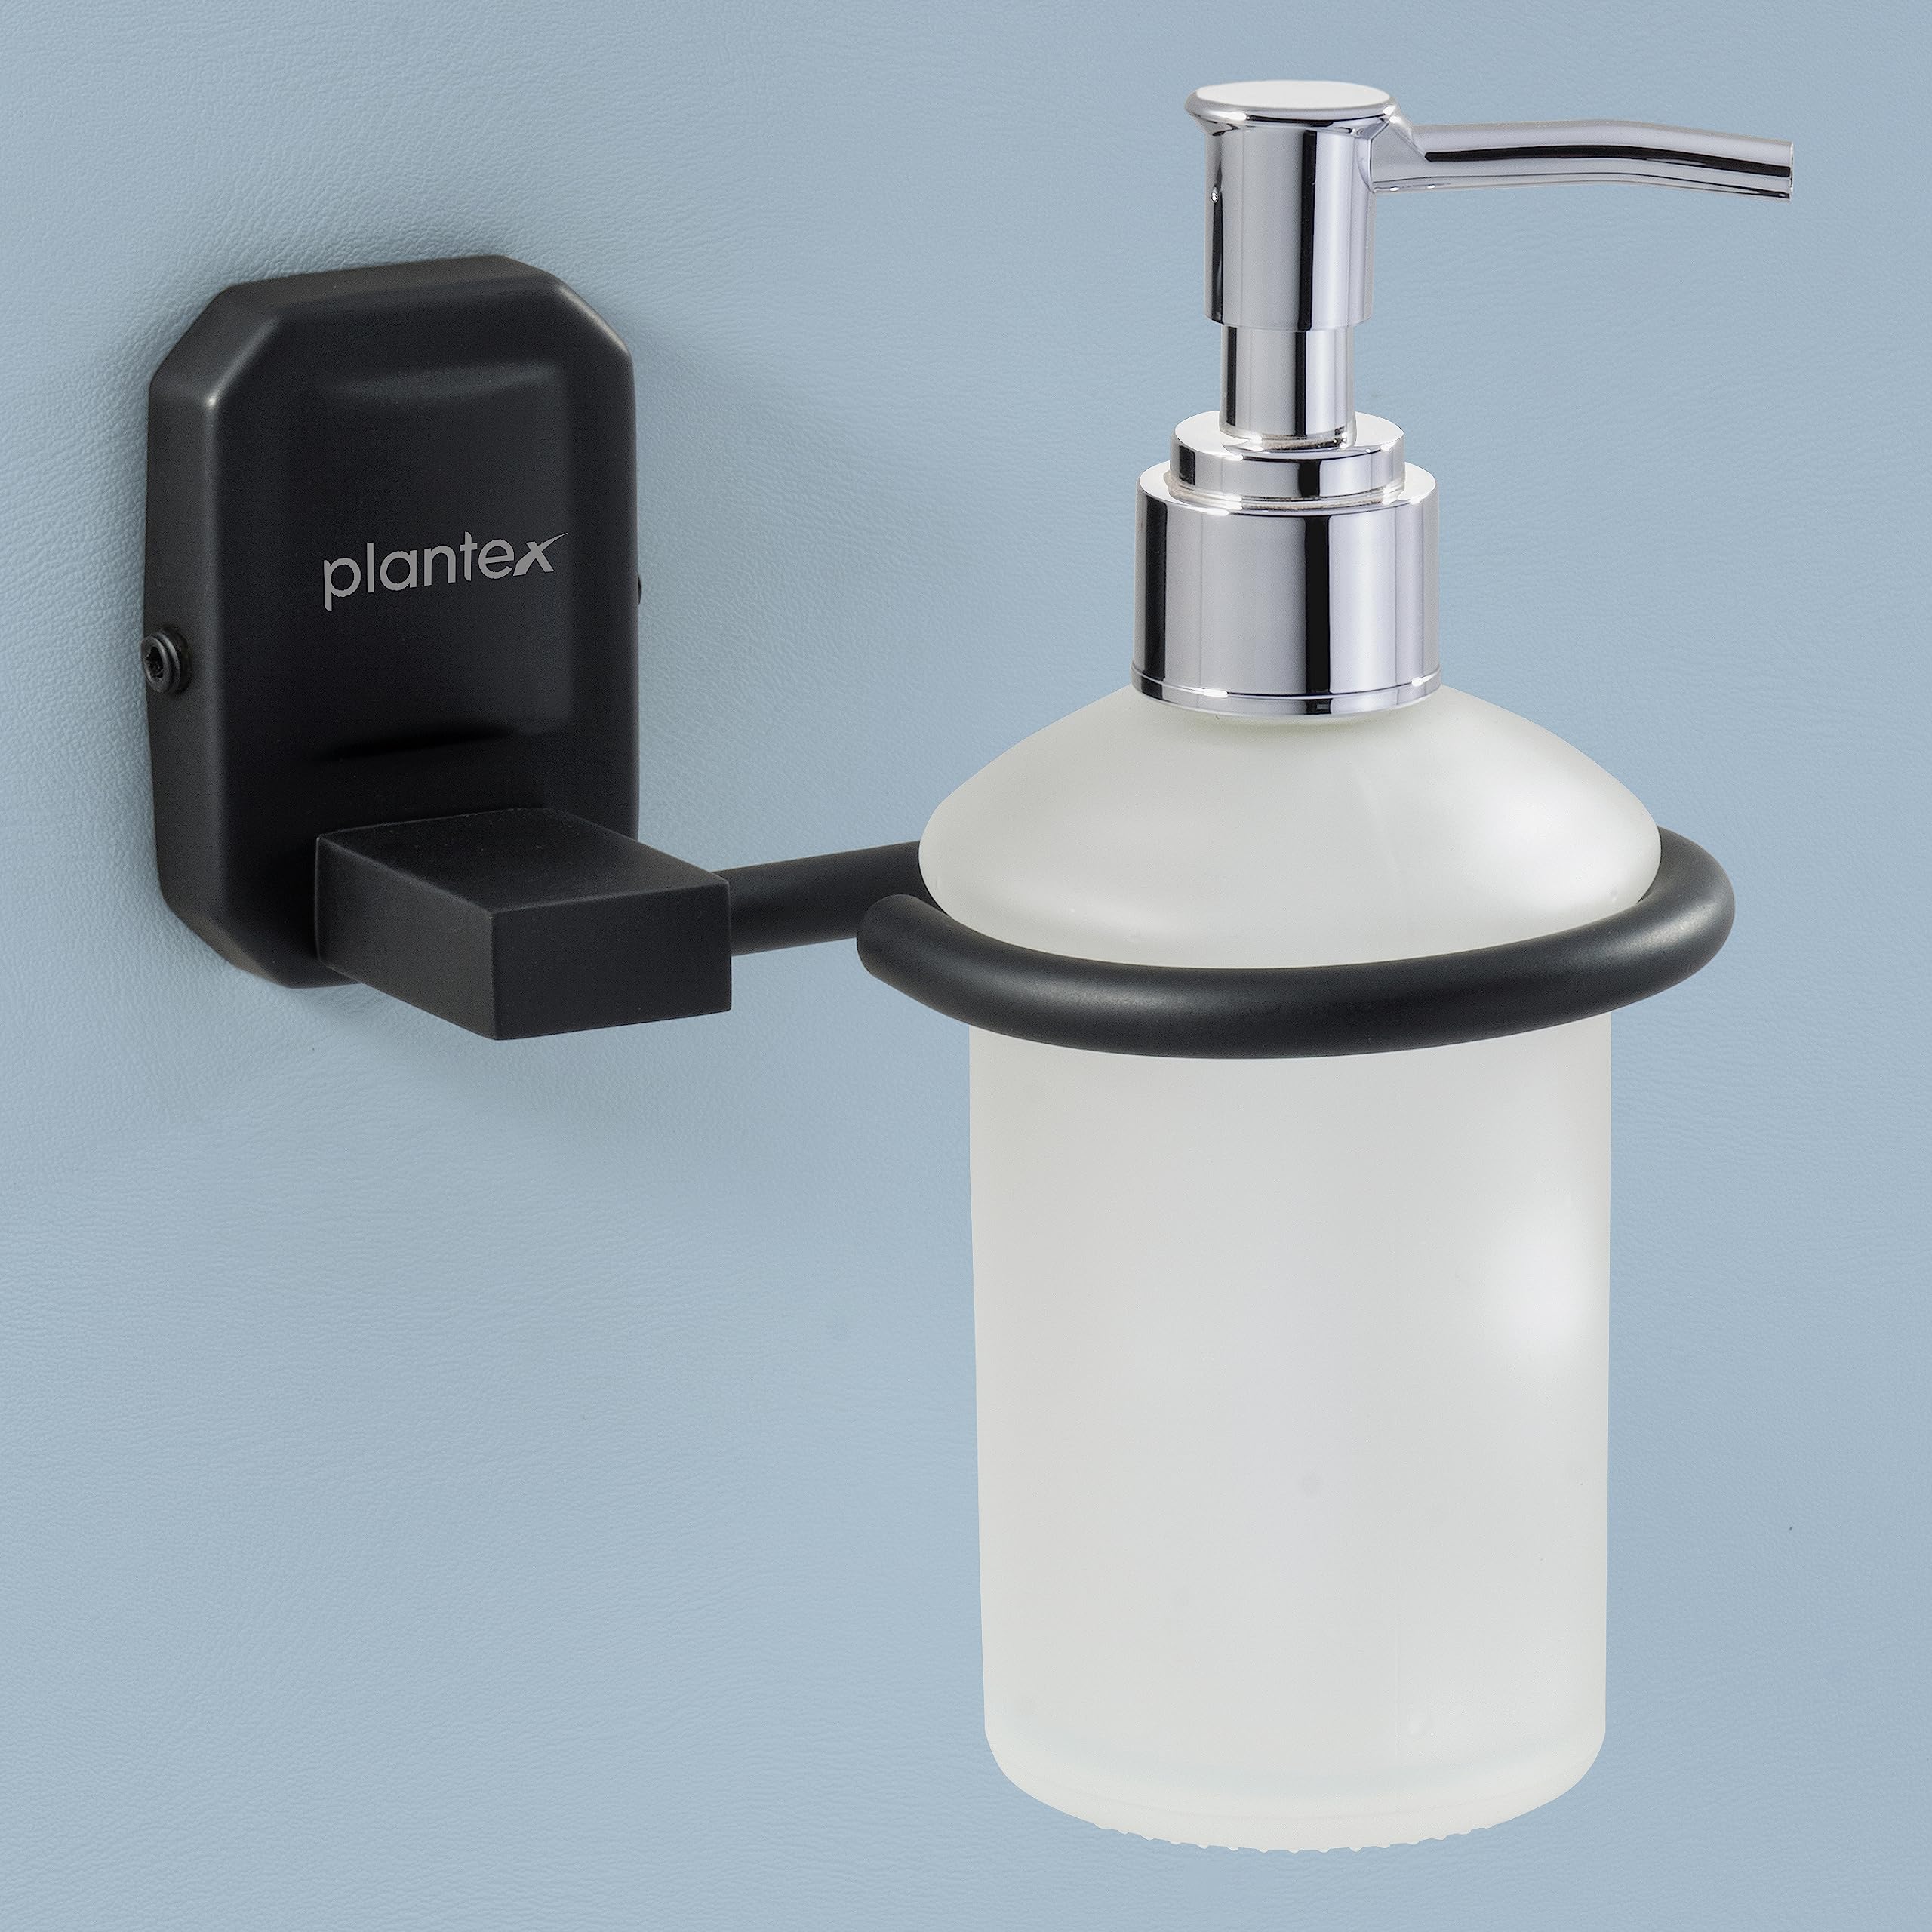 Plantex Cute Black Hand wash Holder for wash Basin Liquid soap Dispenser - 304 Stainless Steel